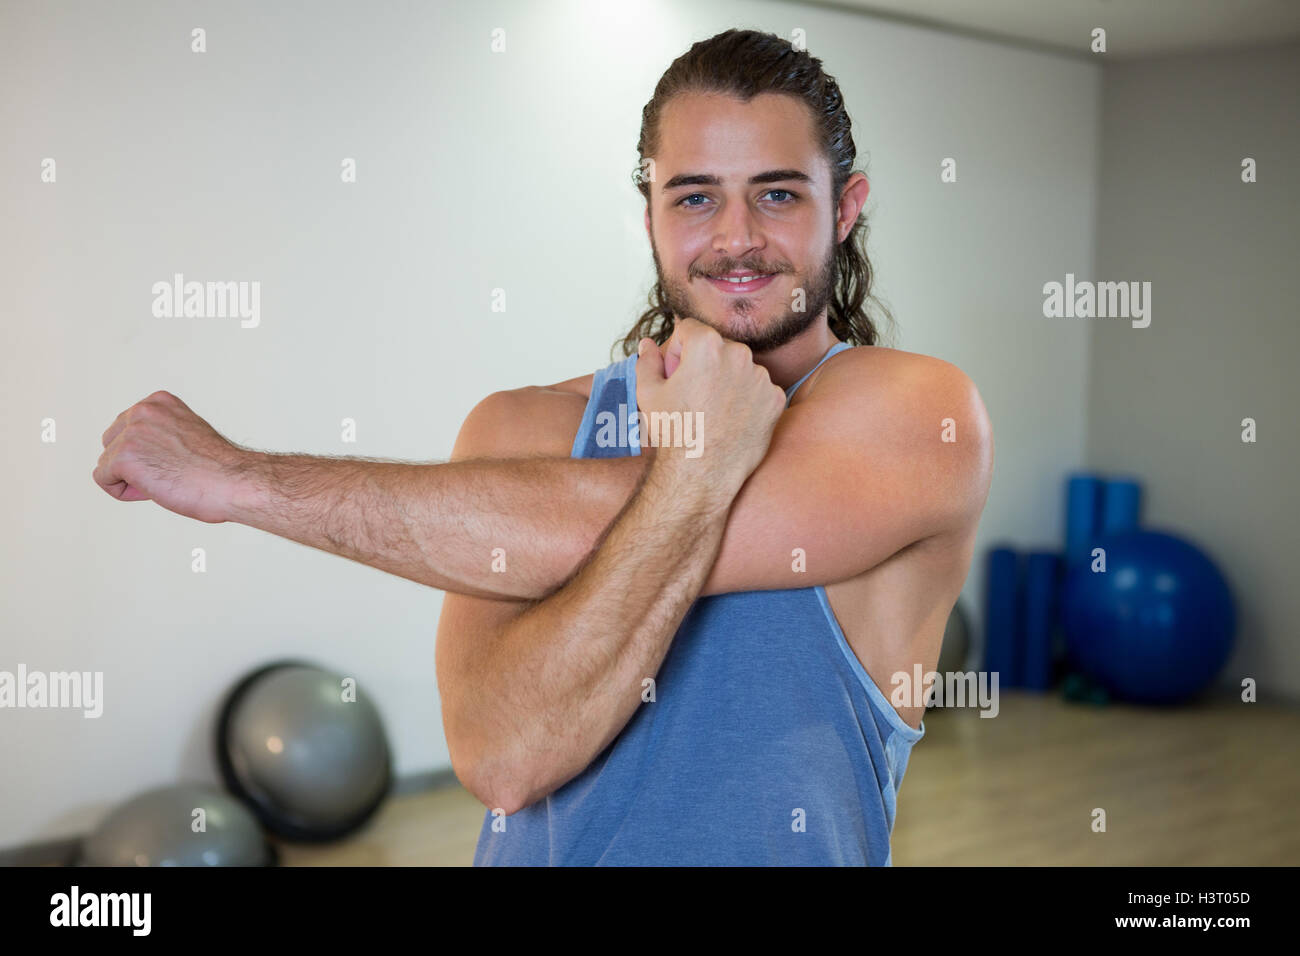 Smiling man doing aerobic exercise Stock Photo